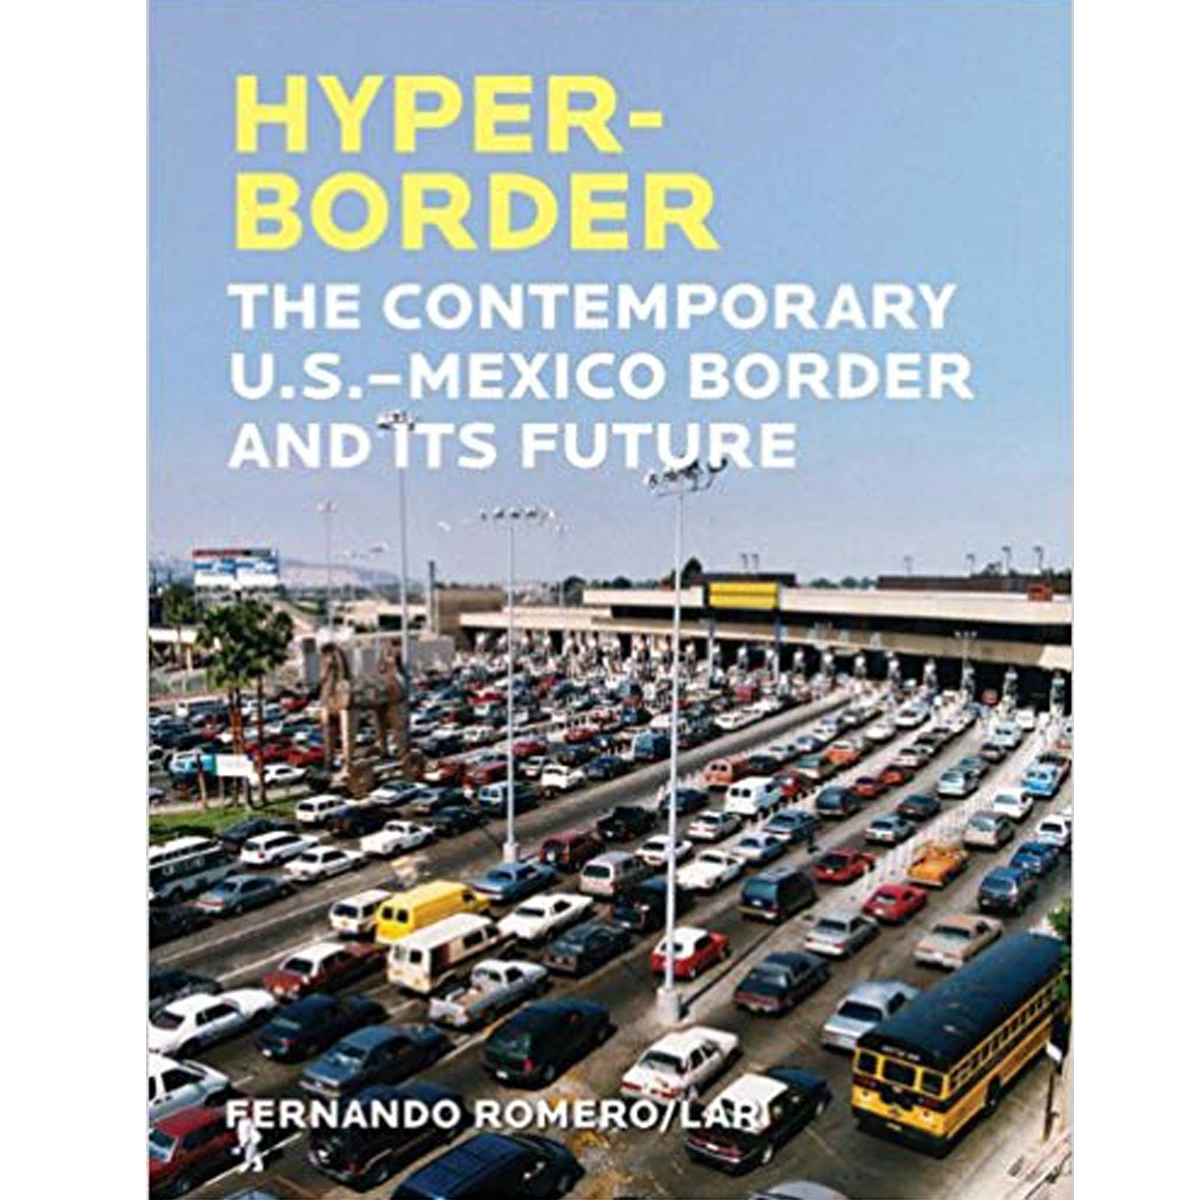 Hyper-border